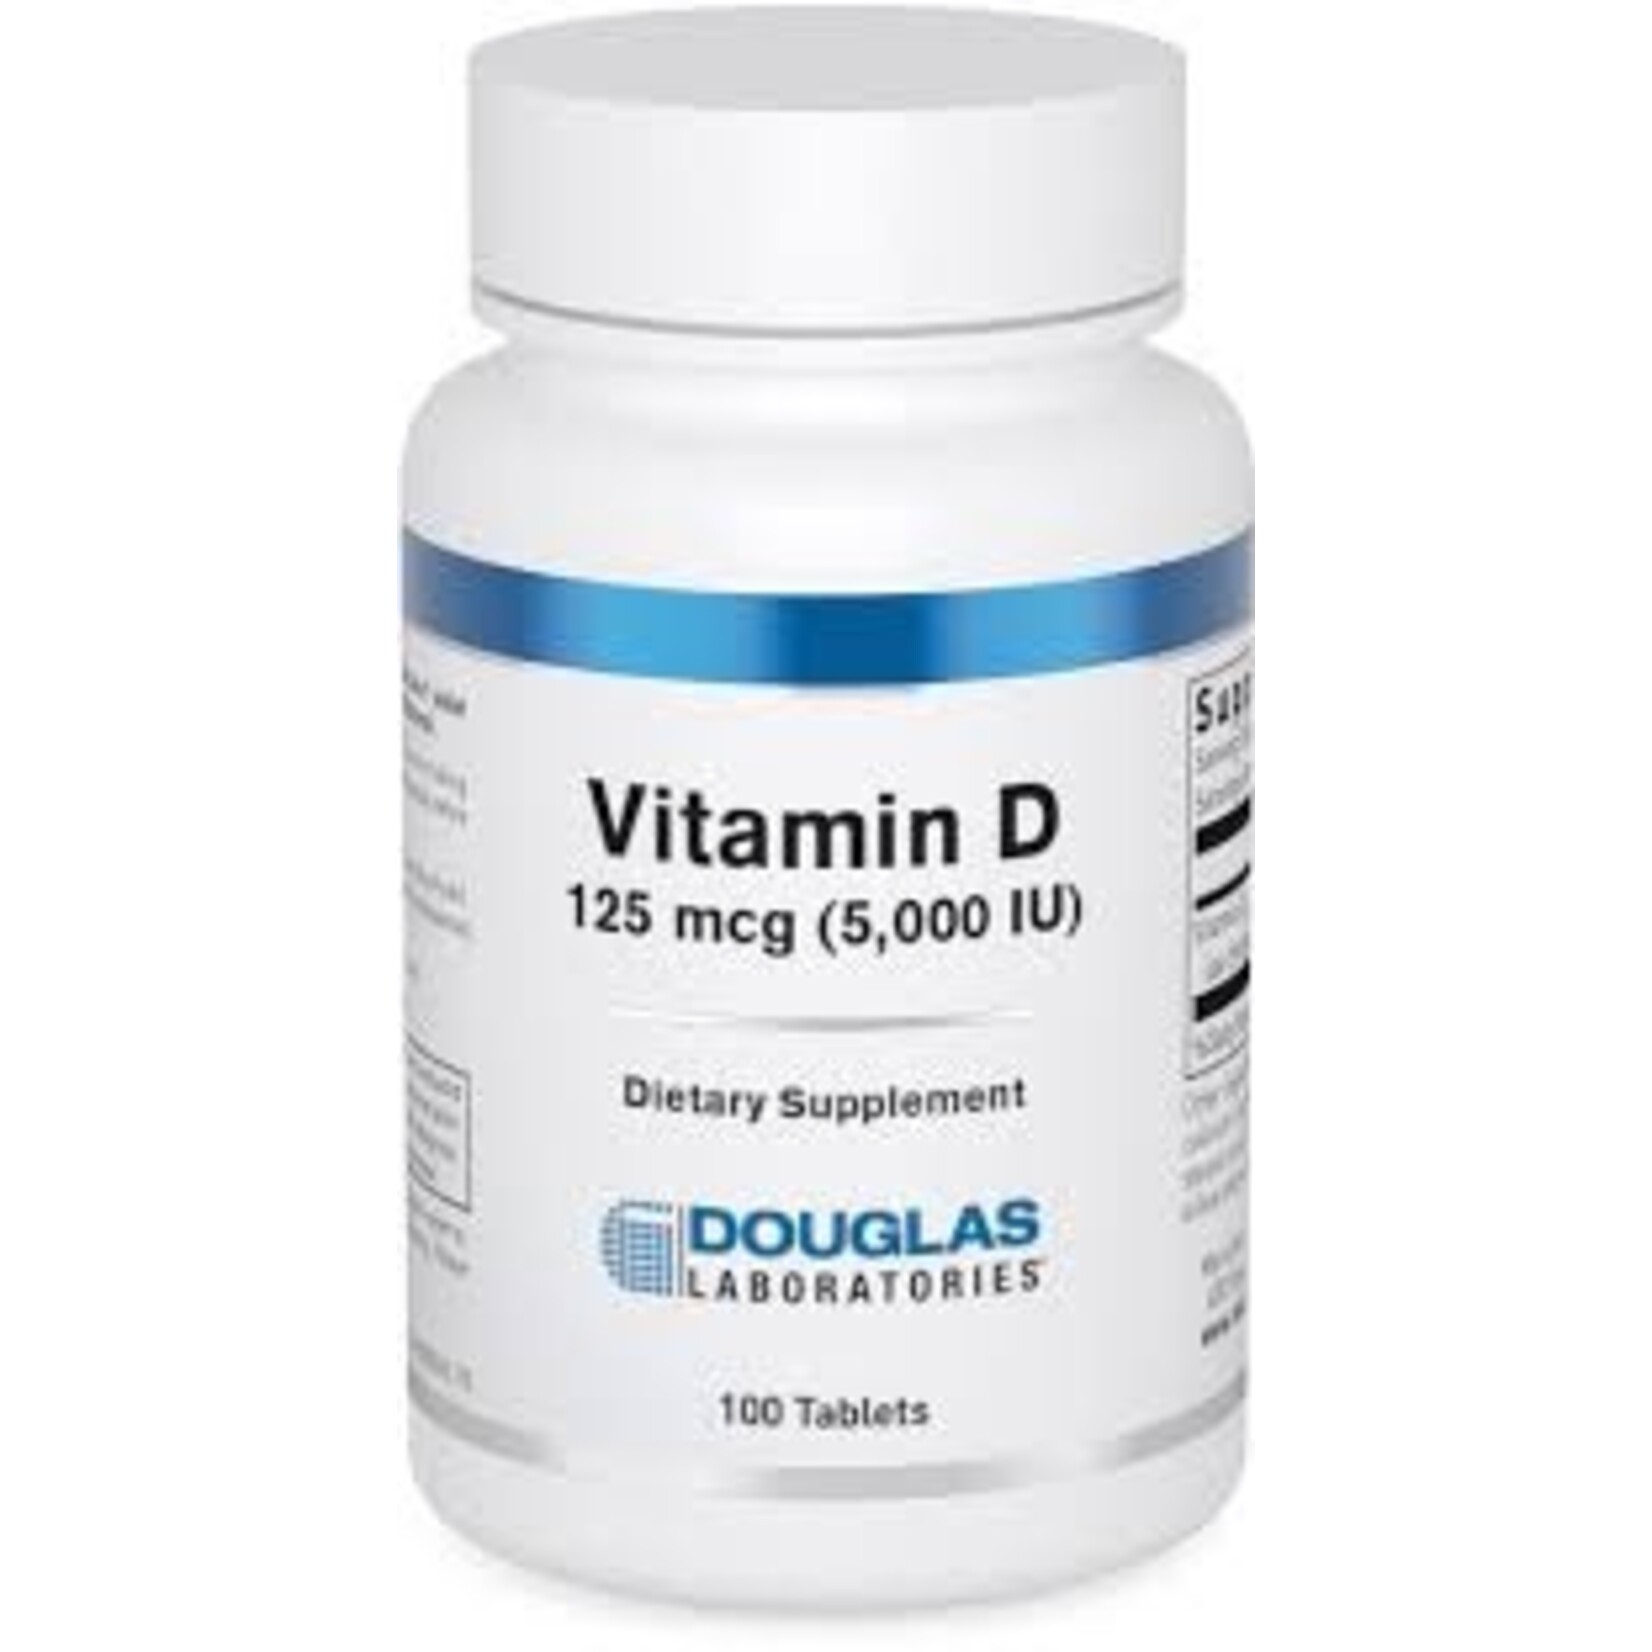 Vitamin D 5000 IU (Douglas Laboratories)